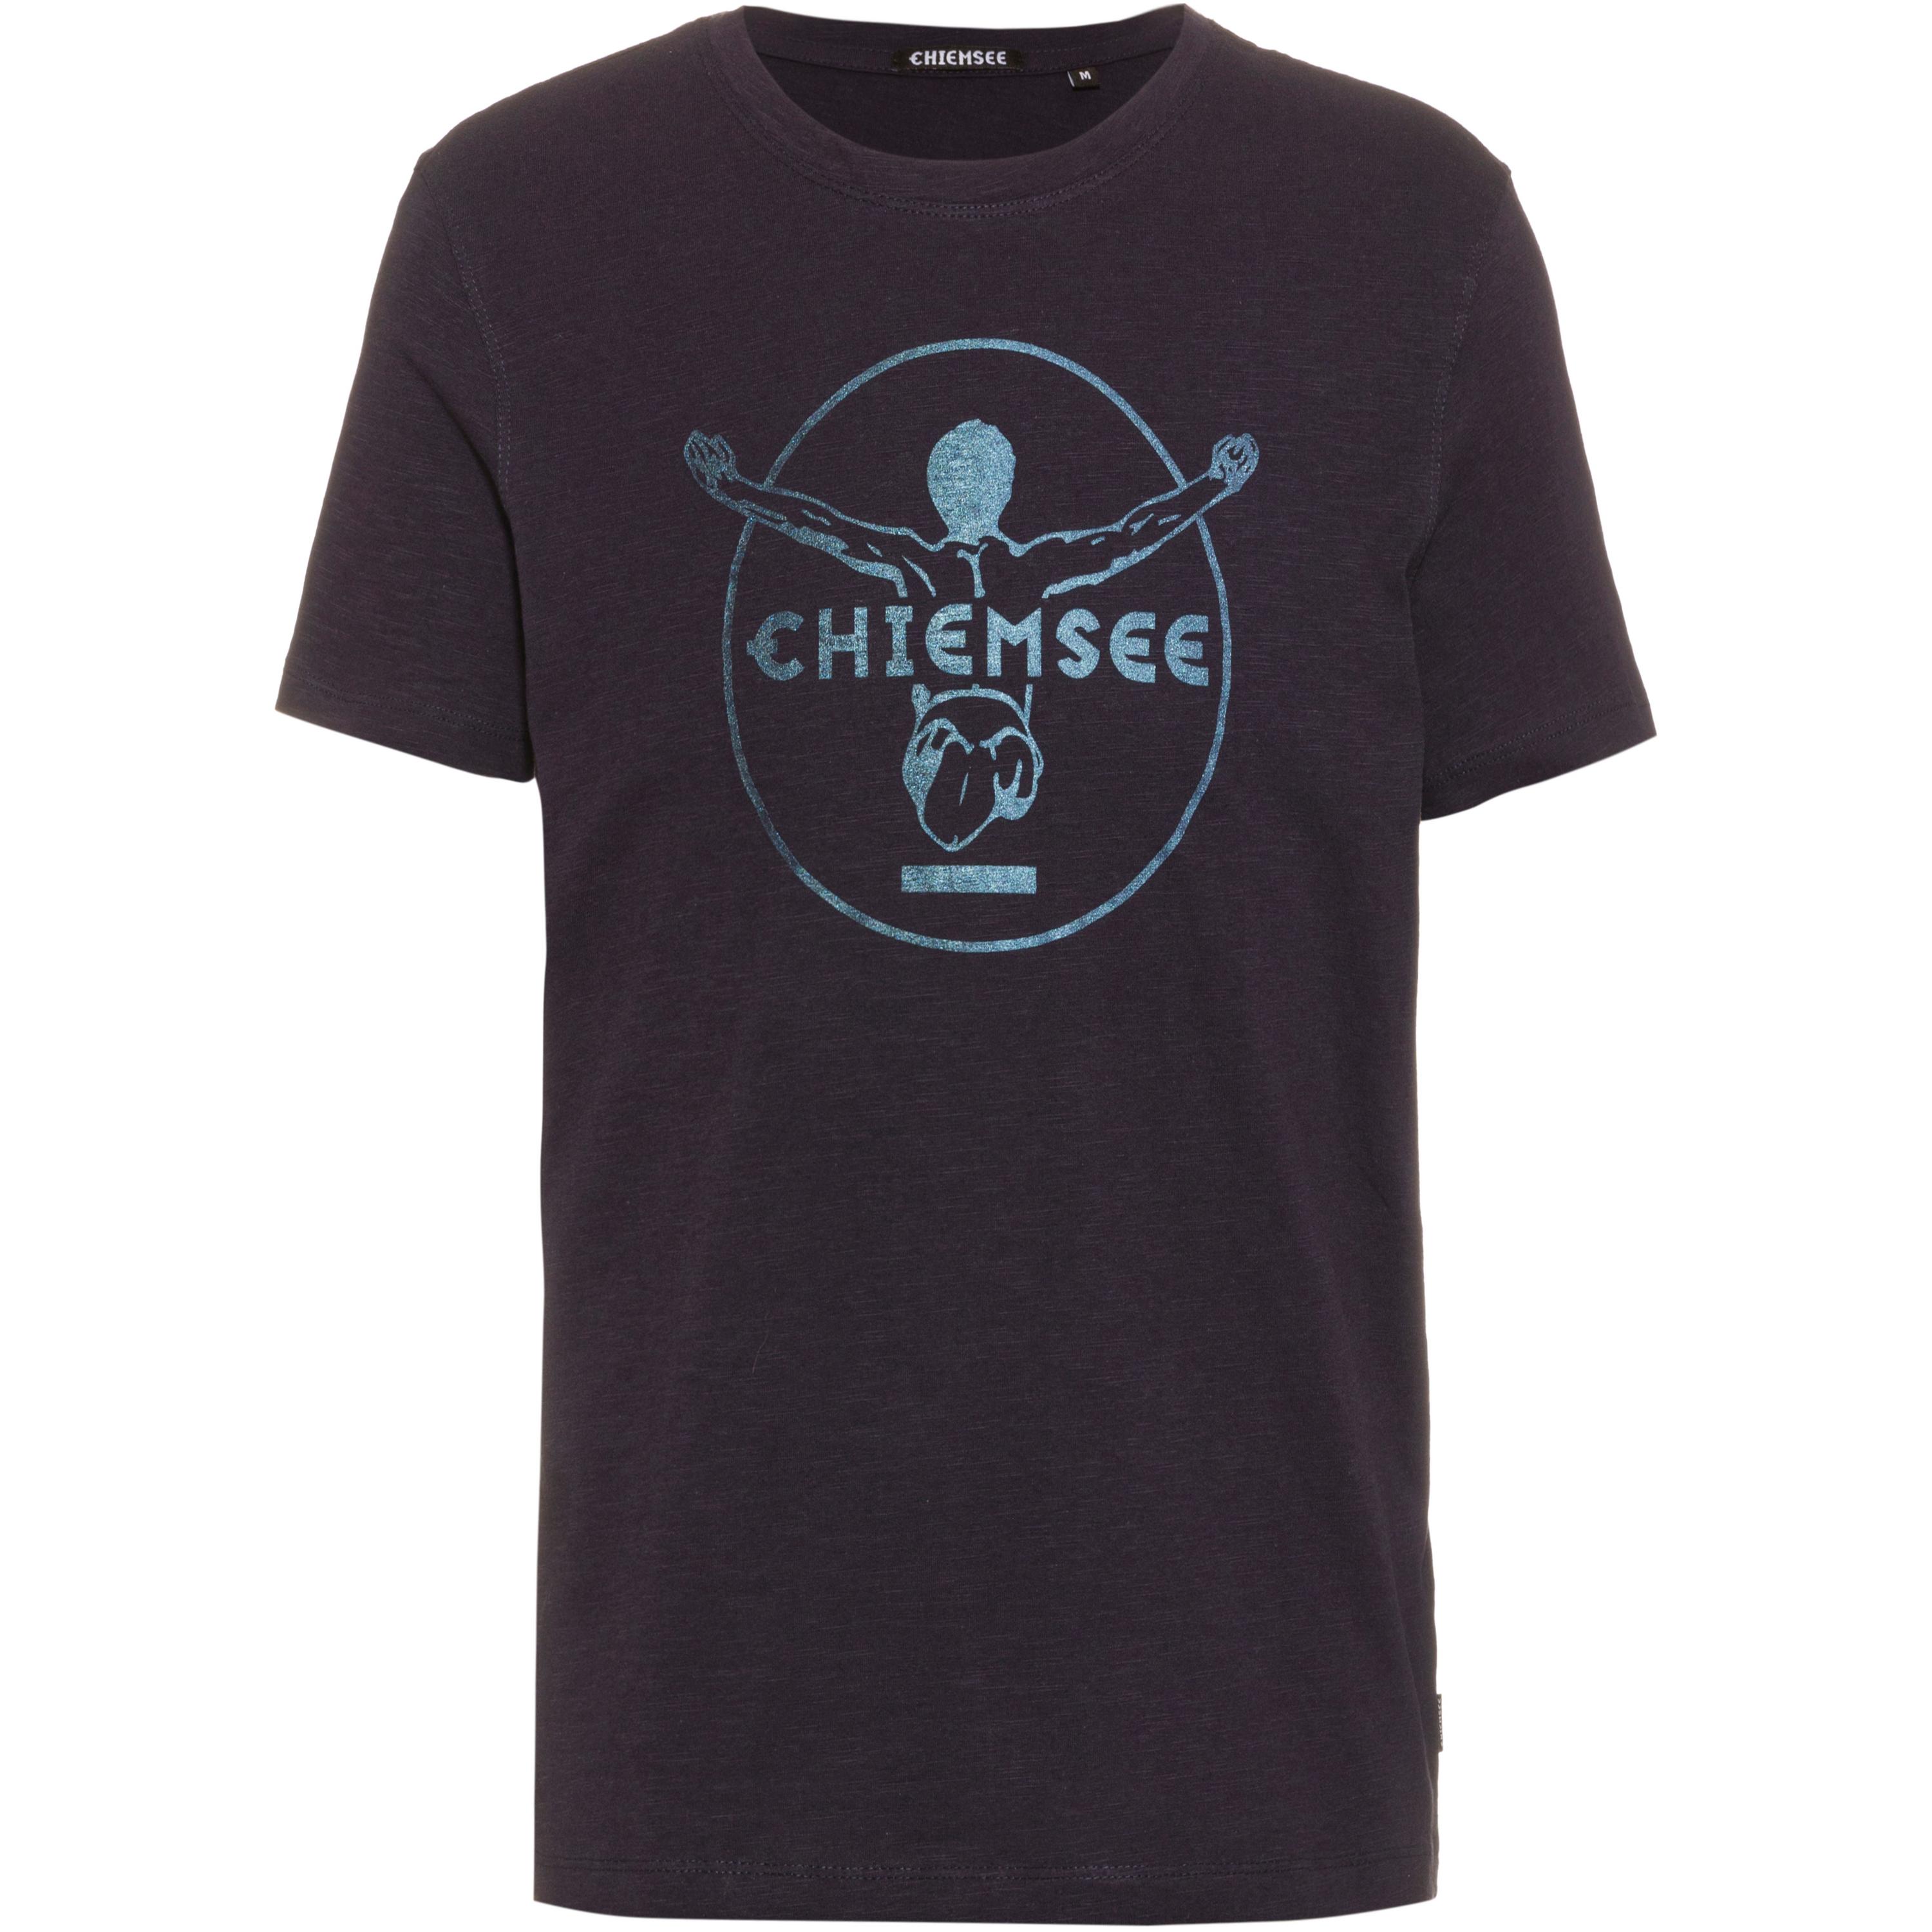 Image of Chiemsee T-Shirt Herren